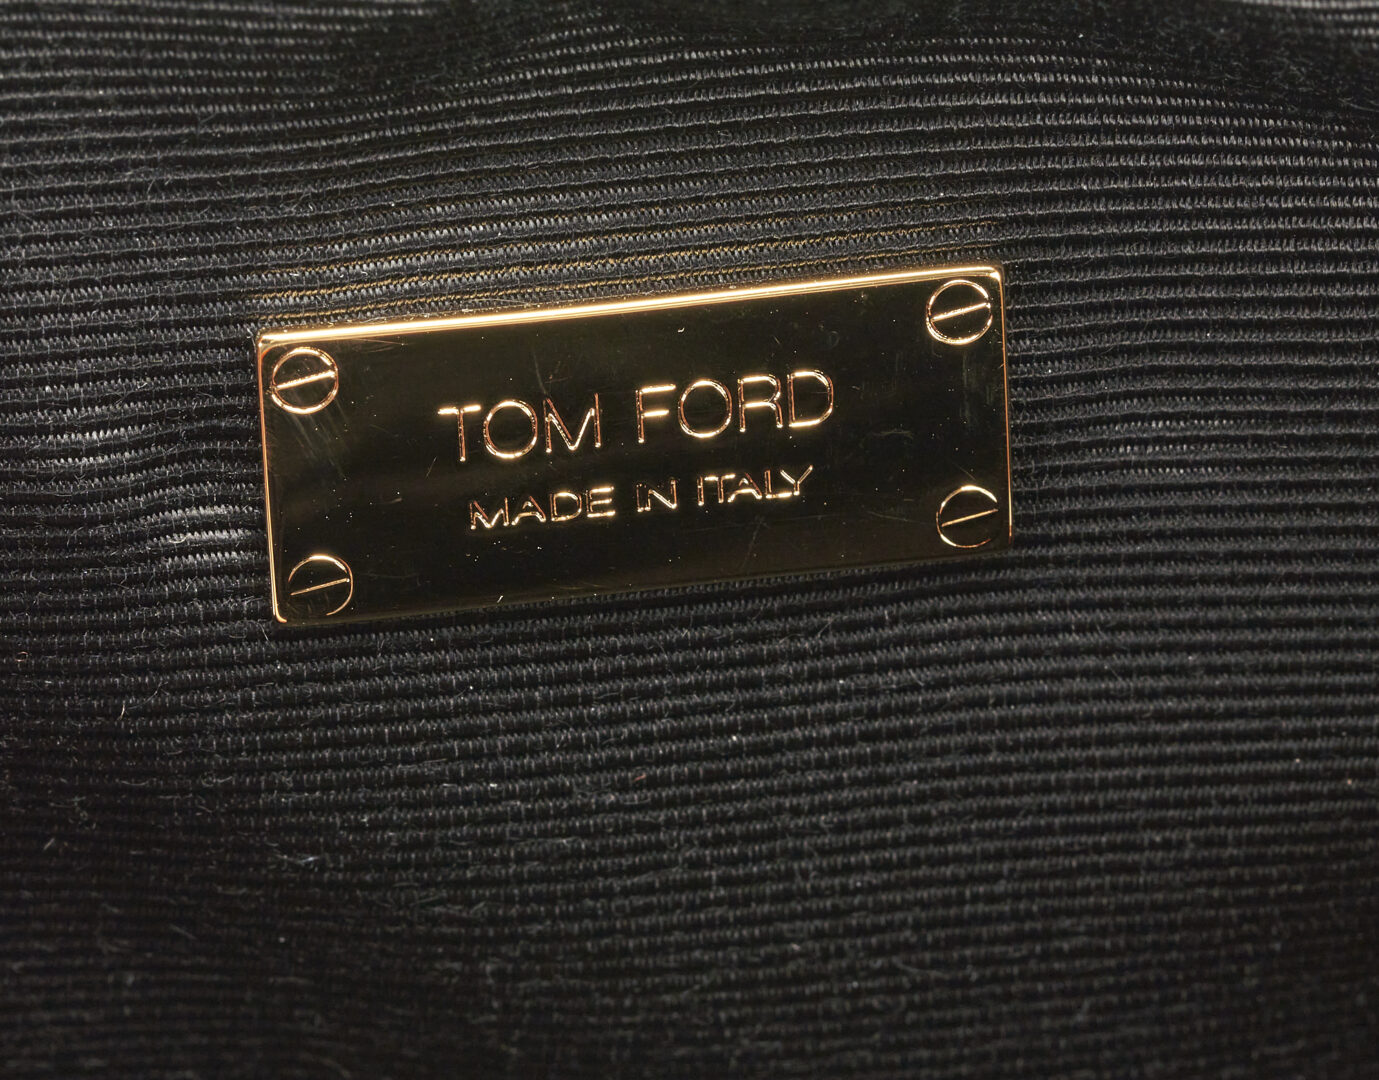 Lot 1209: 4 Tom Ford items, incl. Anoushka Sunglasses